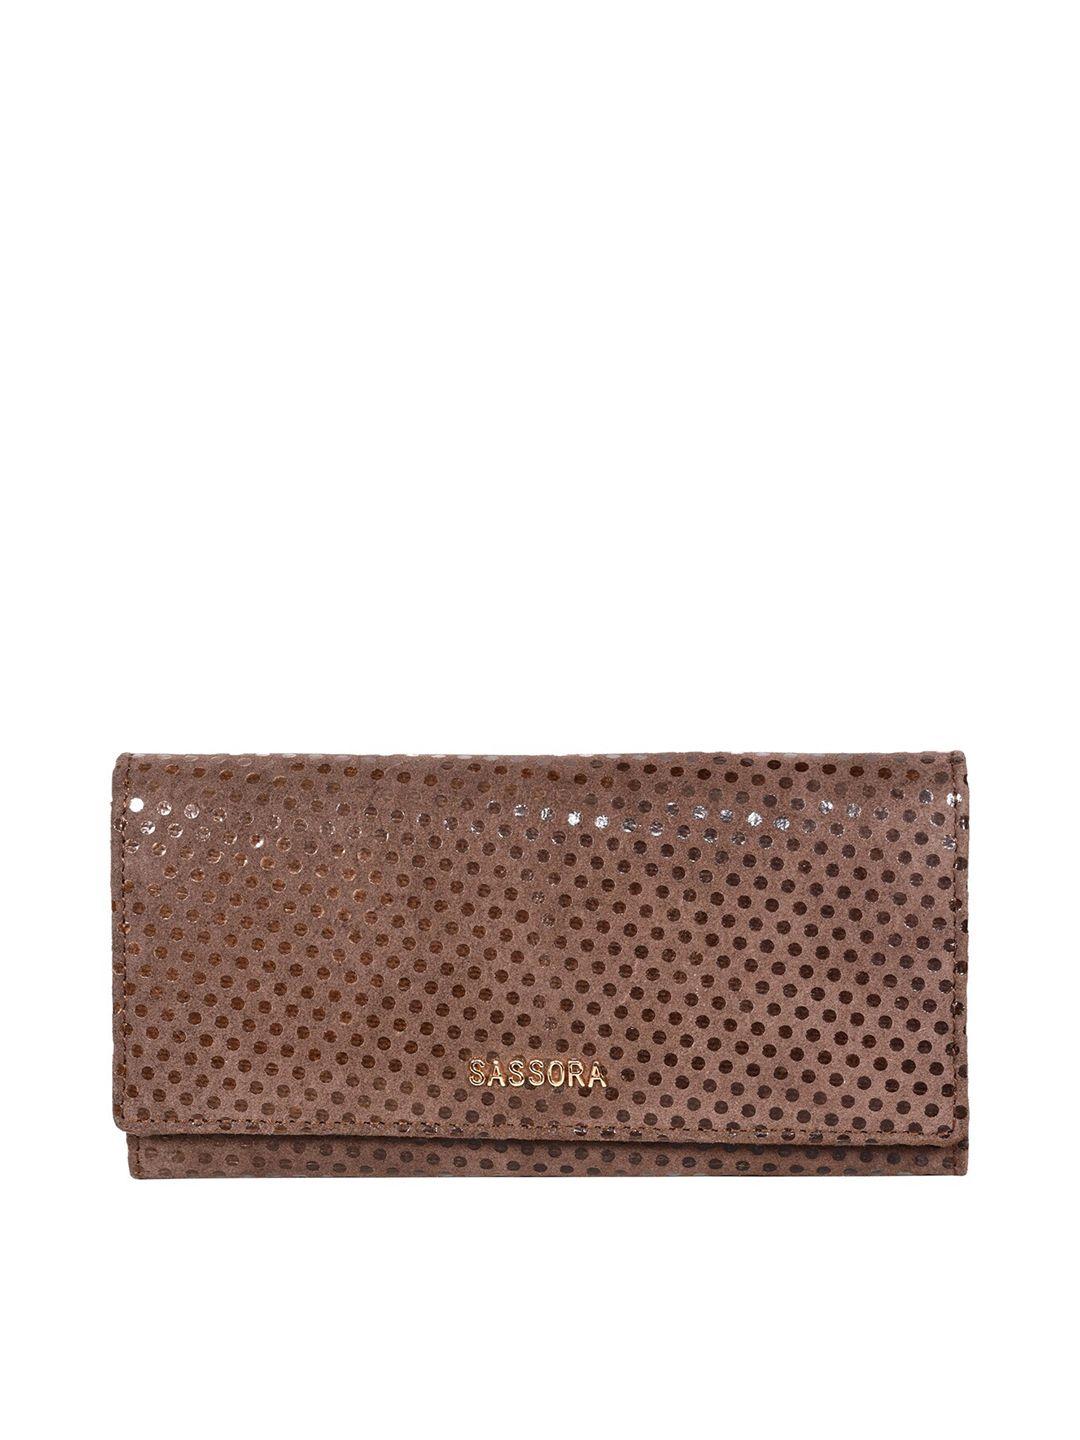 sassora women brown abstract textured leather envelope